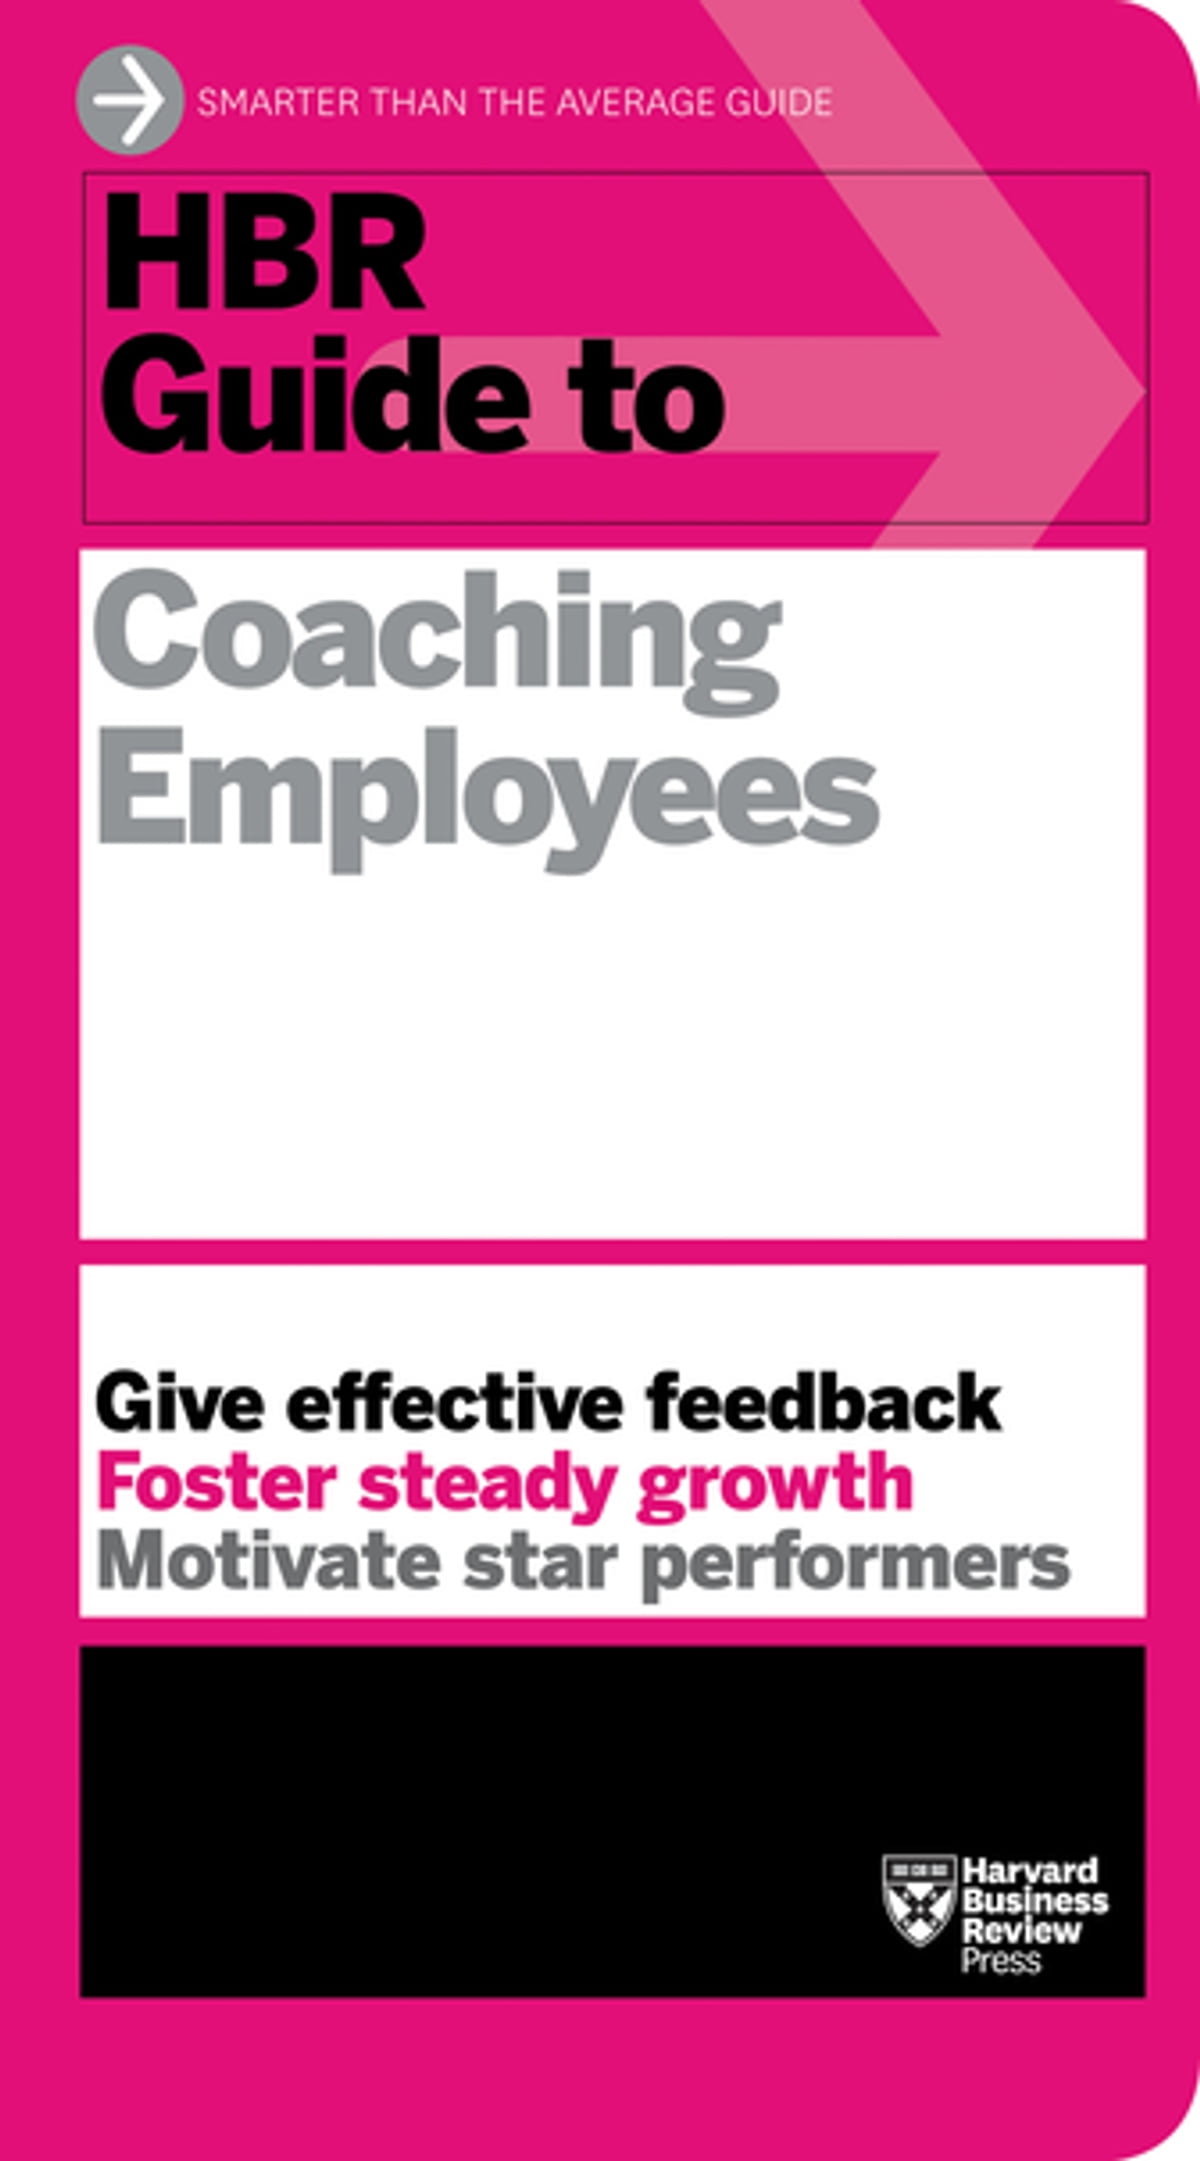 HBR guide to coaching employees.